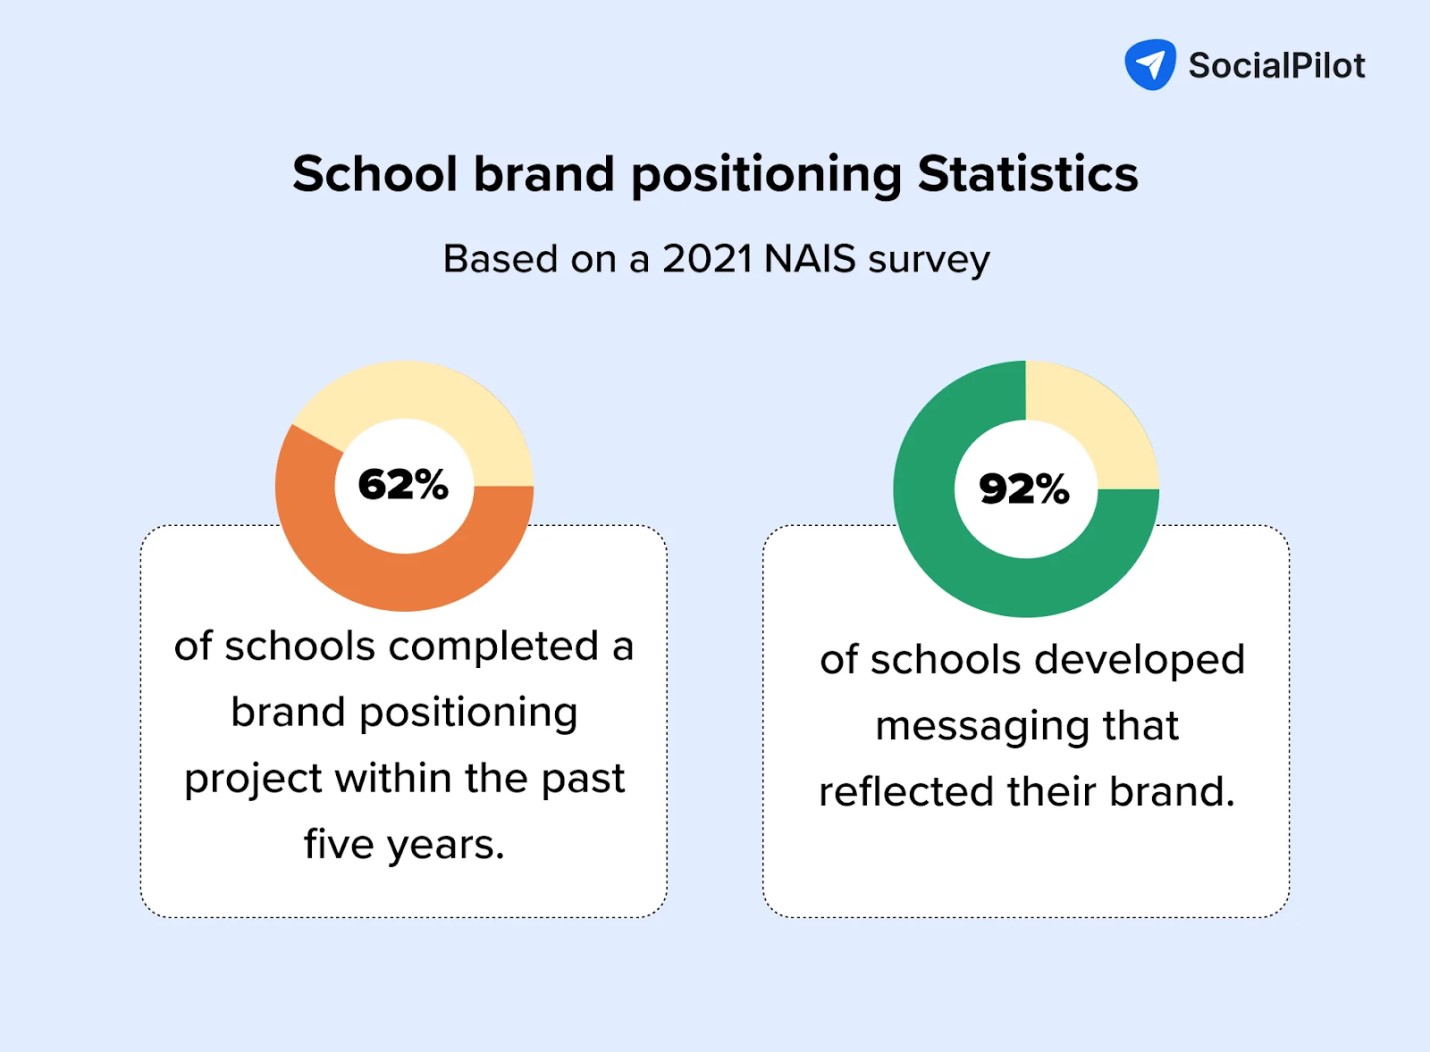 School brand positioning statistics